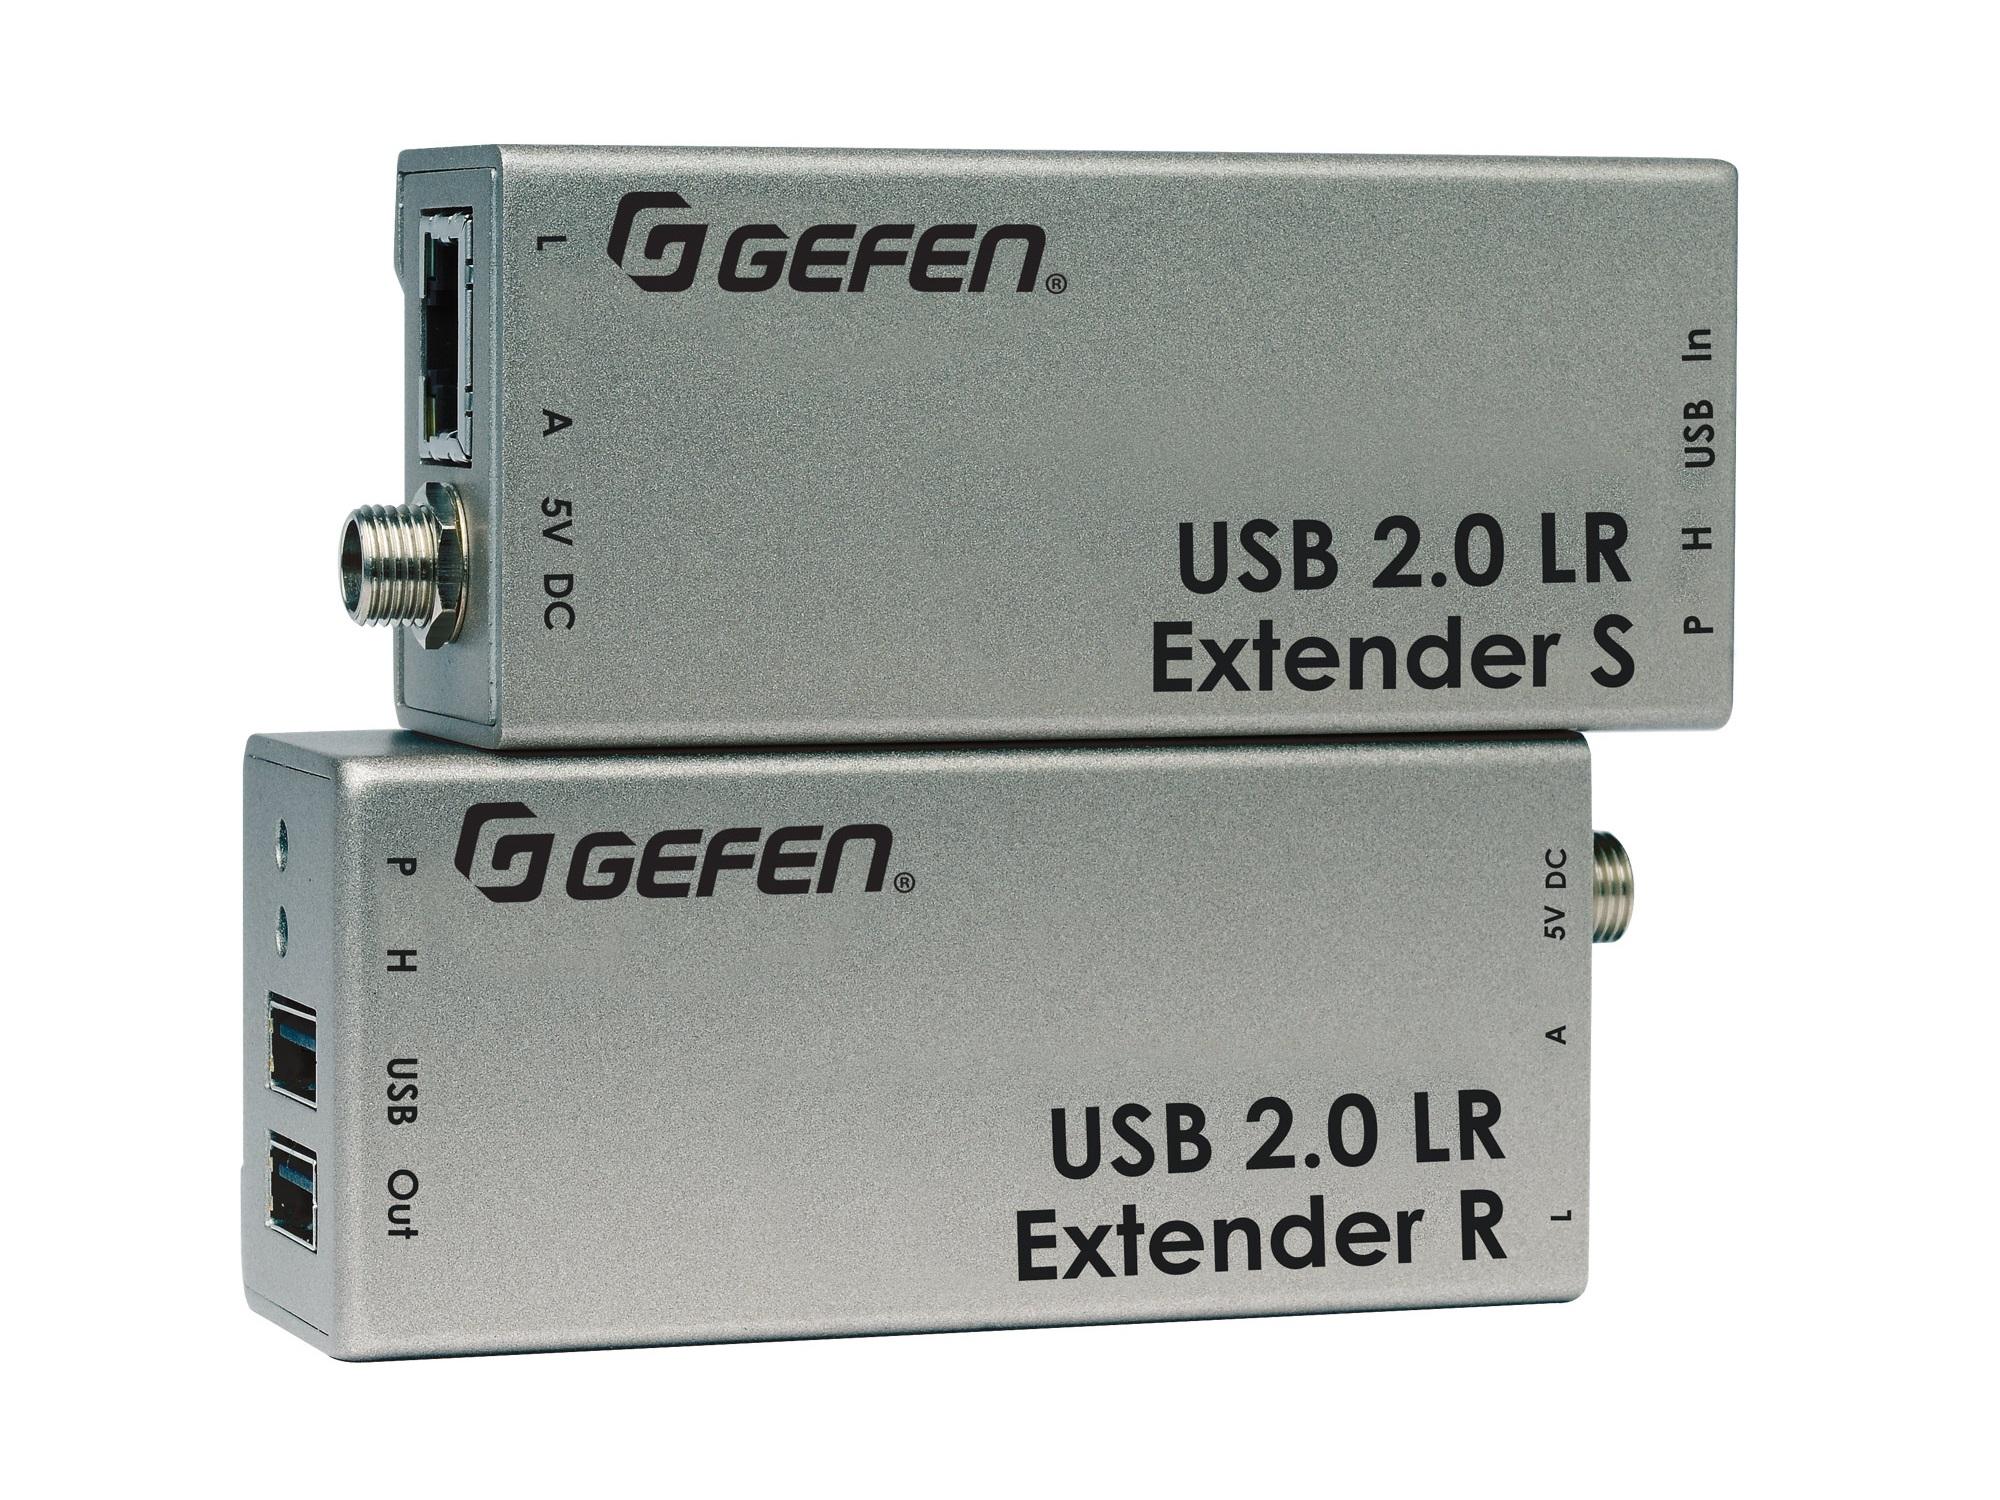 EXT-USB2.0-LR USB 2.0 Extender (Receiver/Sender) Kit by Gefen